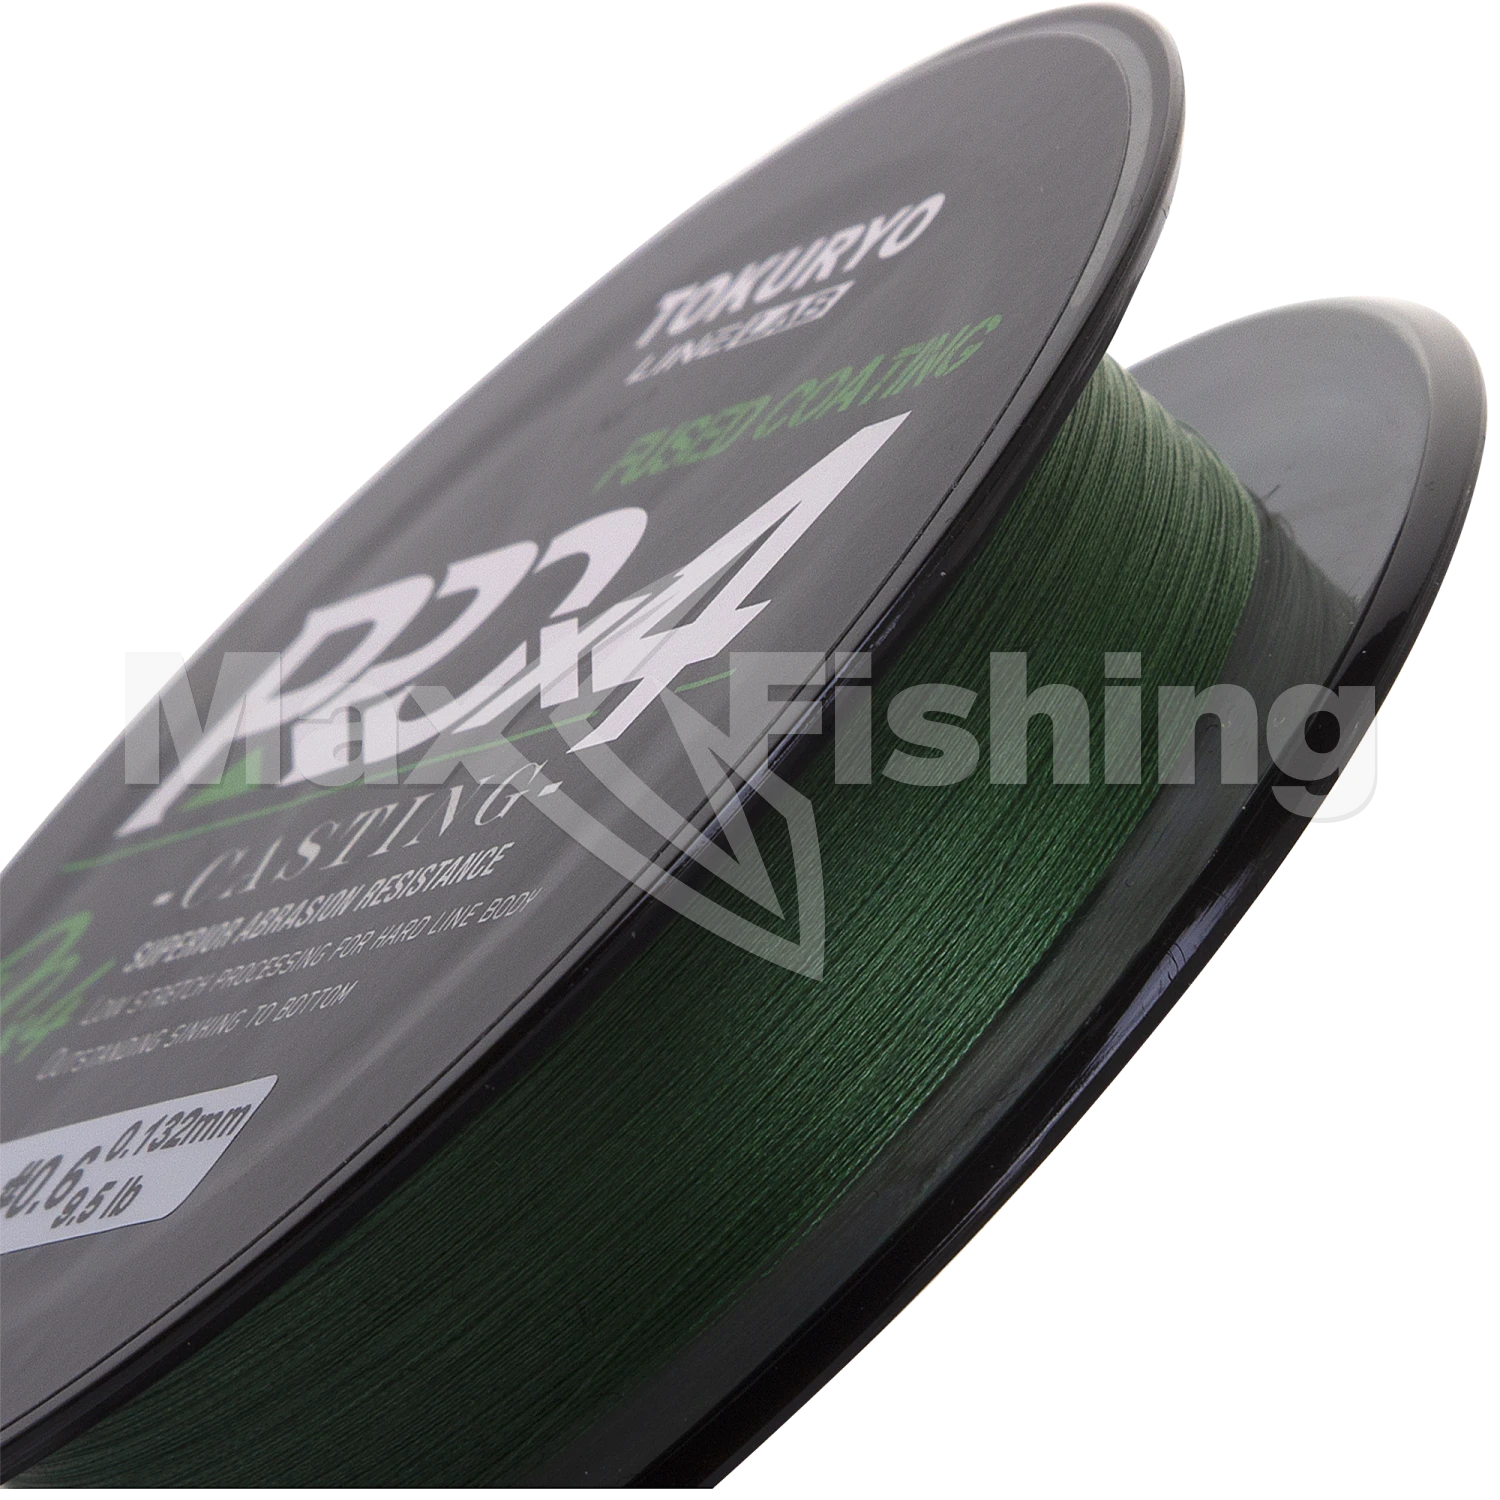 Шнур плетеный Tokuryo Pro PE X4 #0,6 0,132мм 150м (dark green)